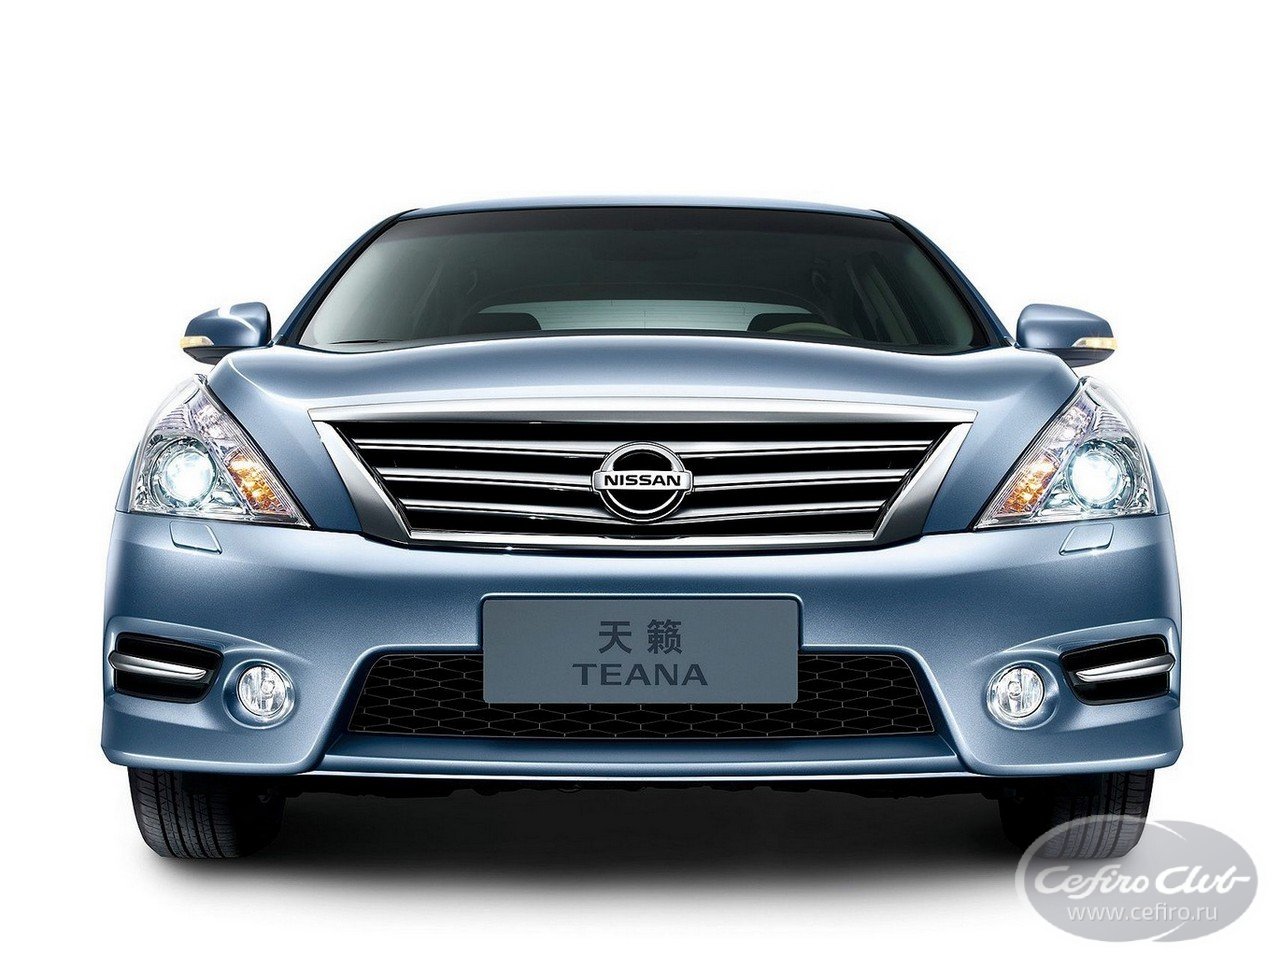 car-vehicle-Nissan-2013-netcarshow-netcar-car-images-car-photo-wheel-Teana-China-version-land-...jpg